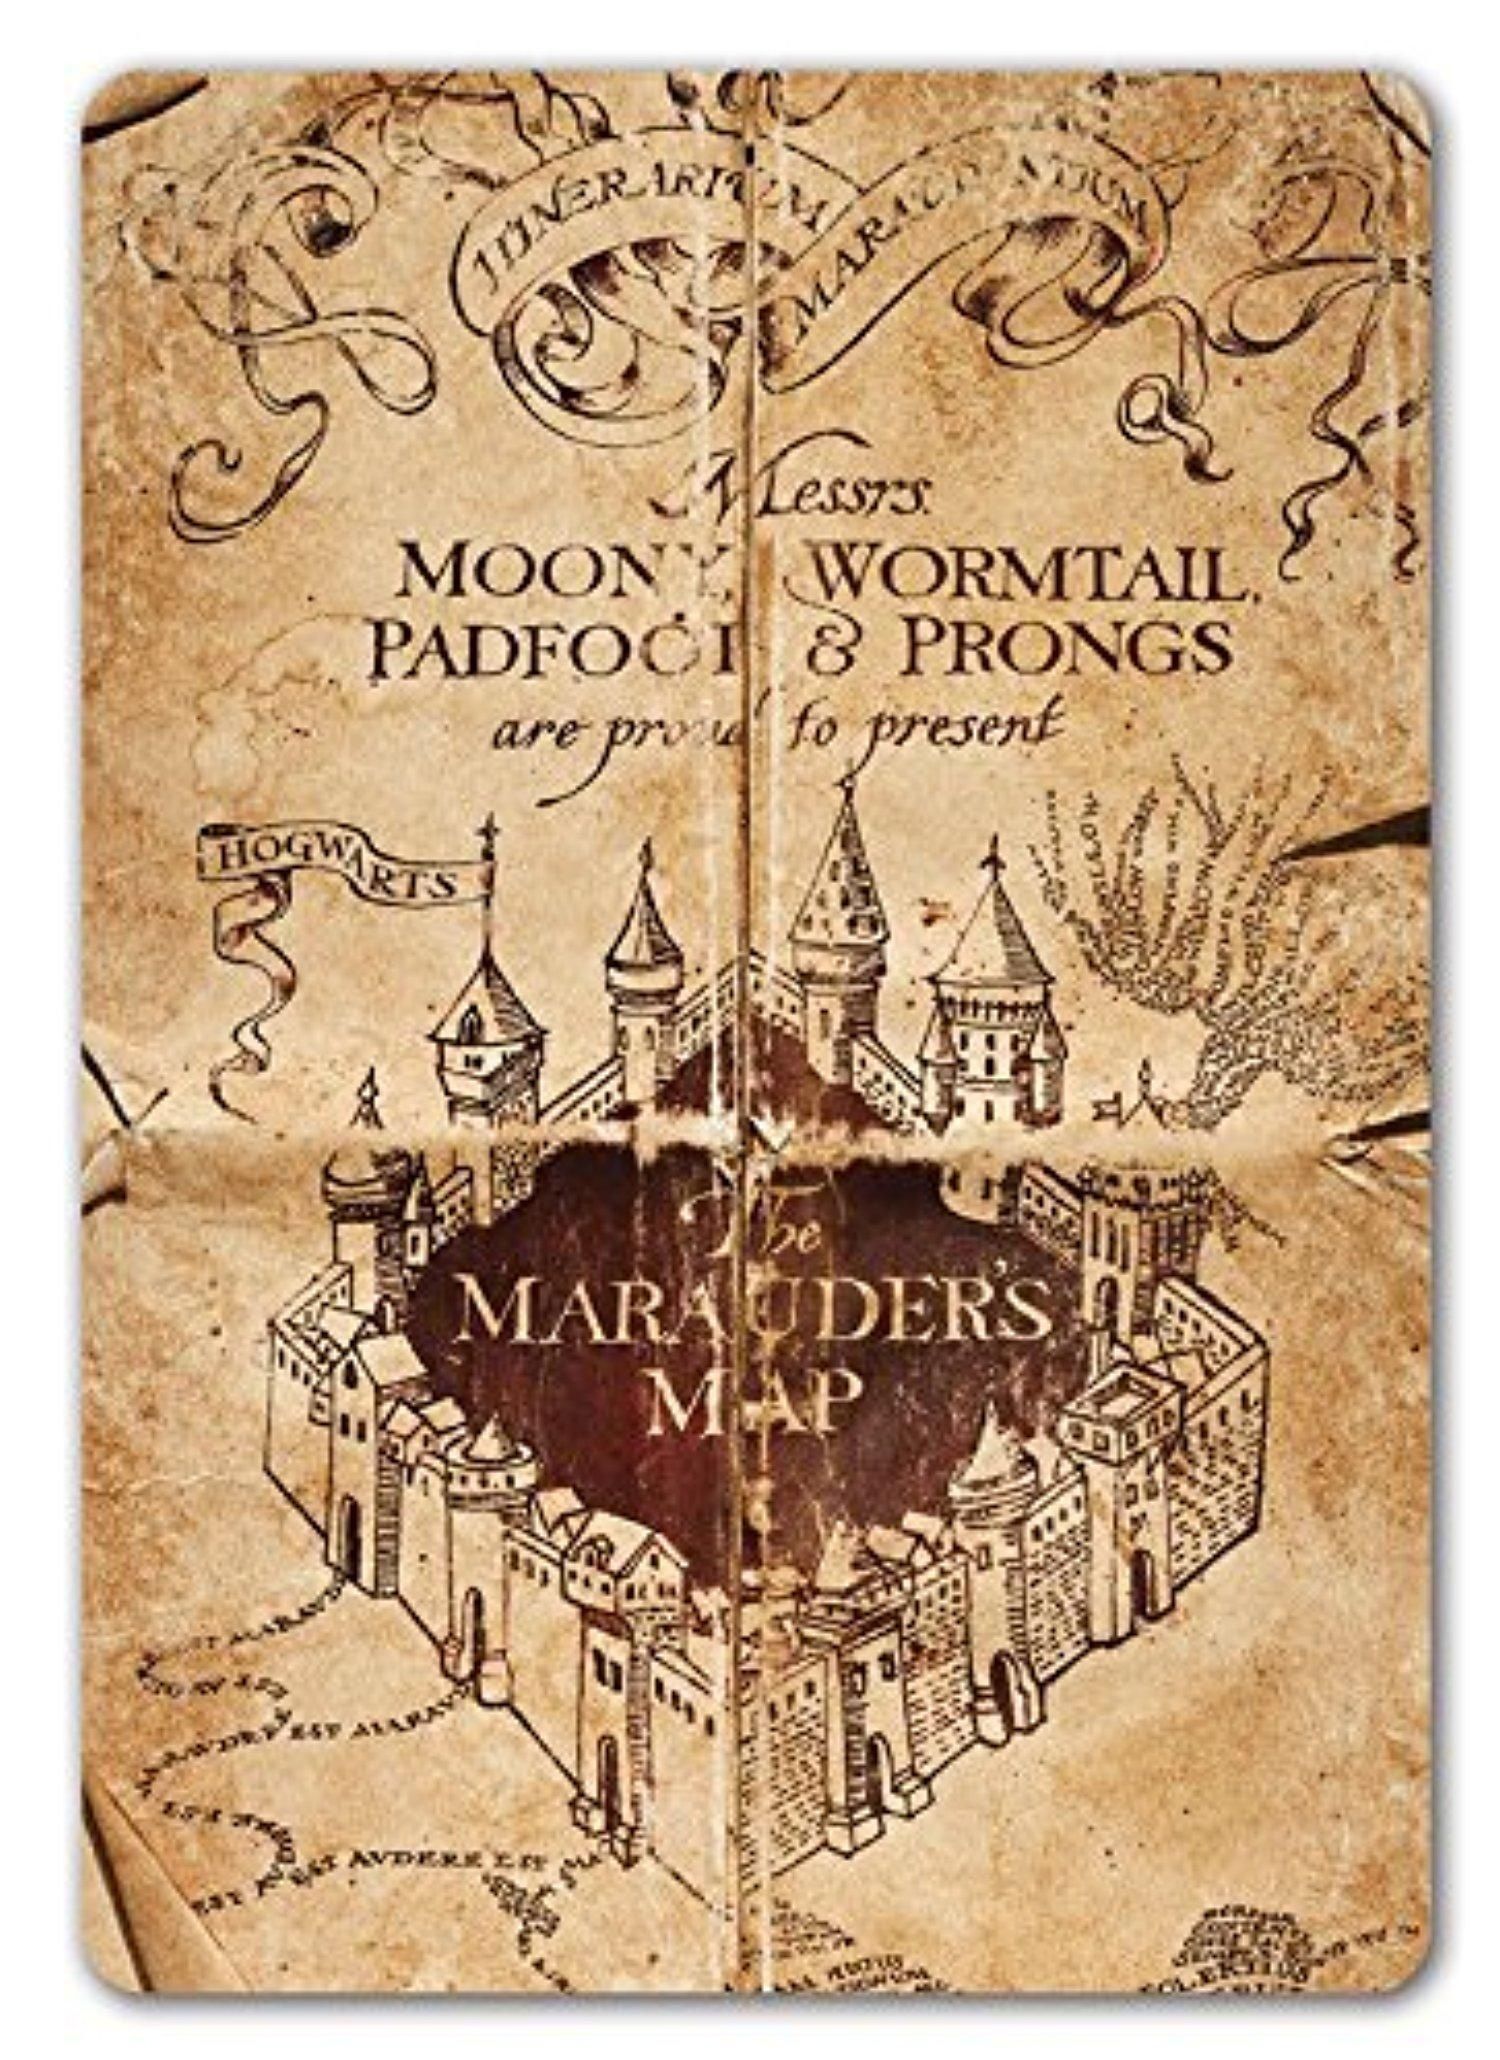 marauders map iphone 5 wallpaper